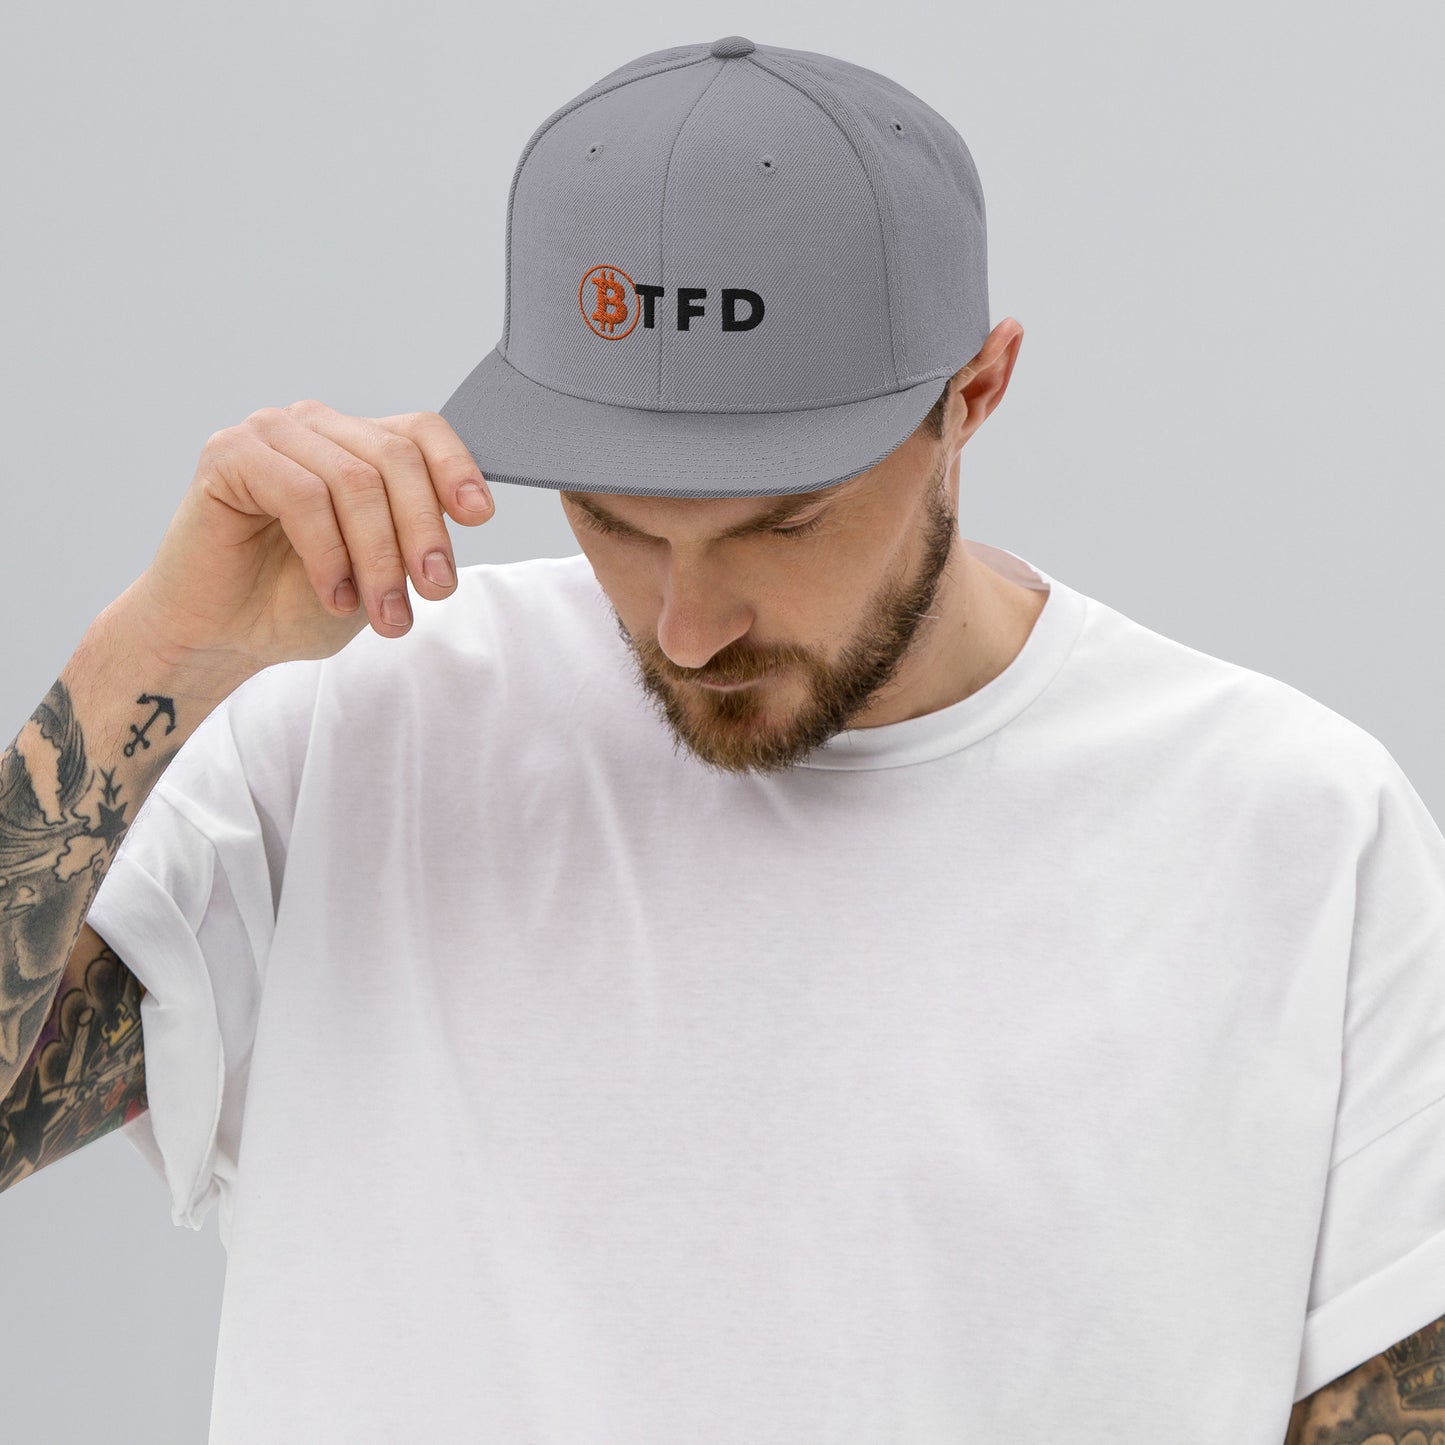 BTFD Snapback Hat